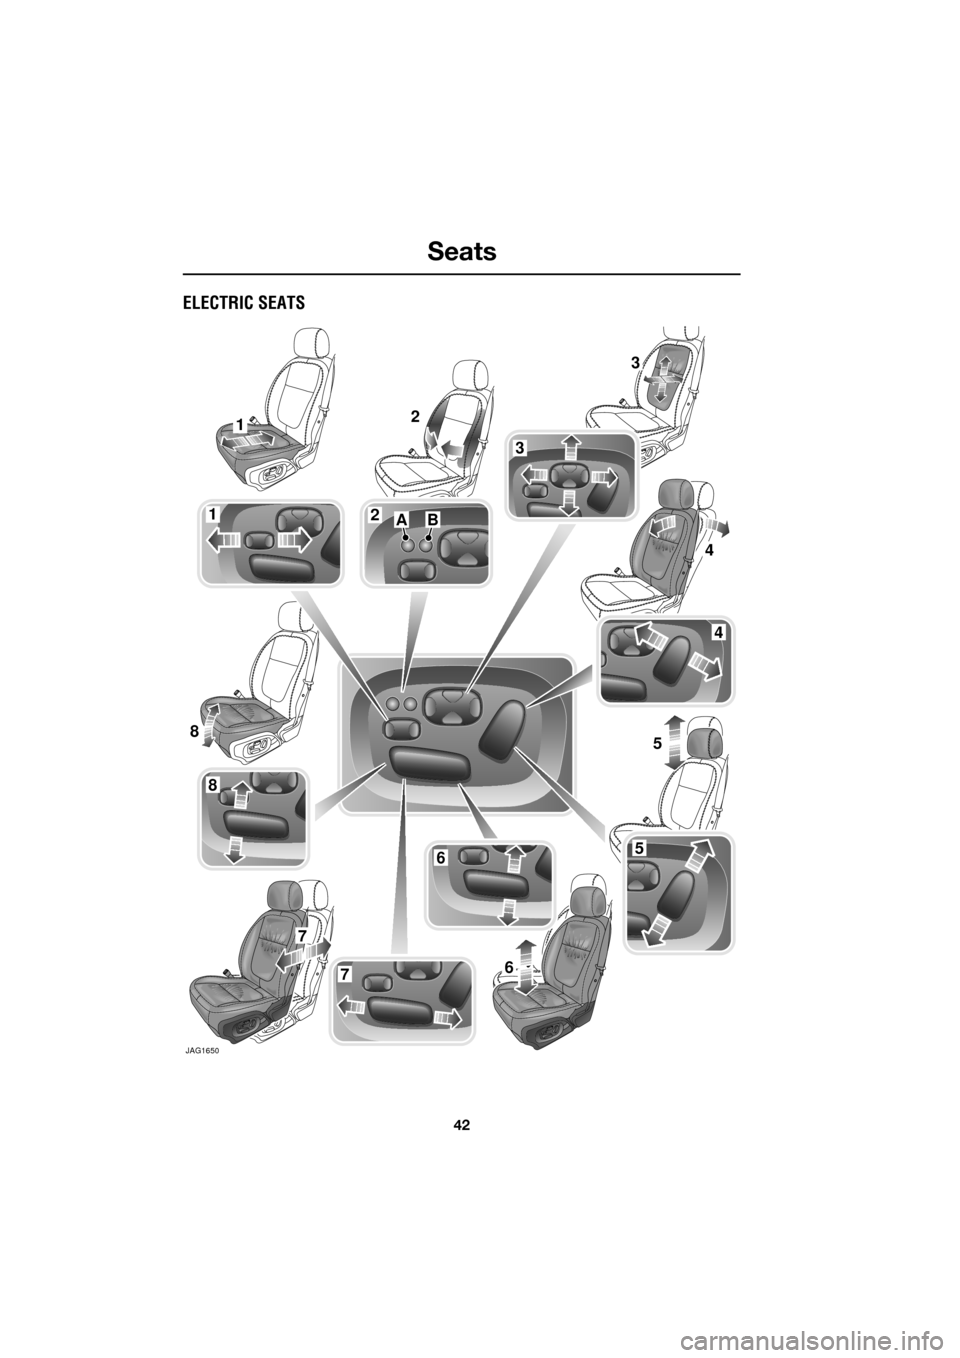 JAGUAR XF 2009 1.G Service Manual Seats
42
               
ELECTRIC SEATS
JAG1650
1
1
2
2AB
3
3
4
56
7
8
4
5
67
8 